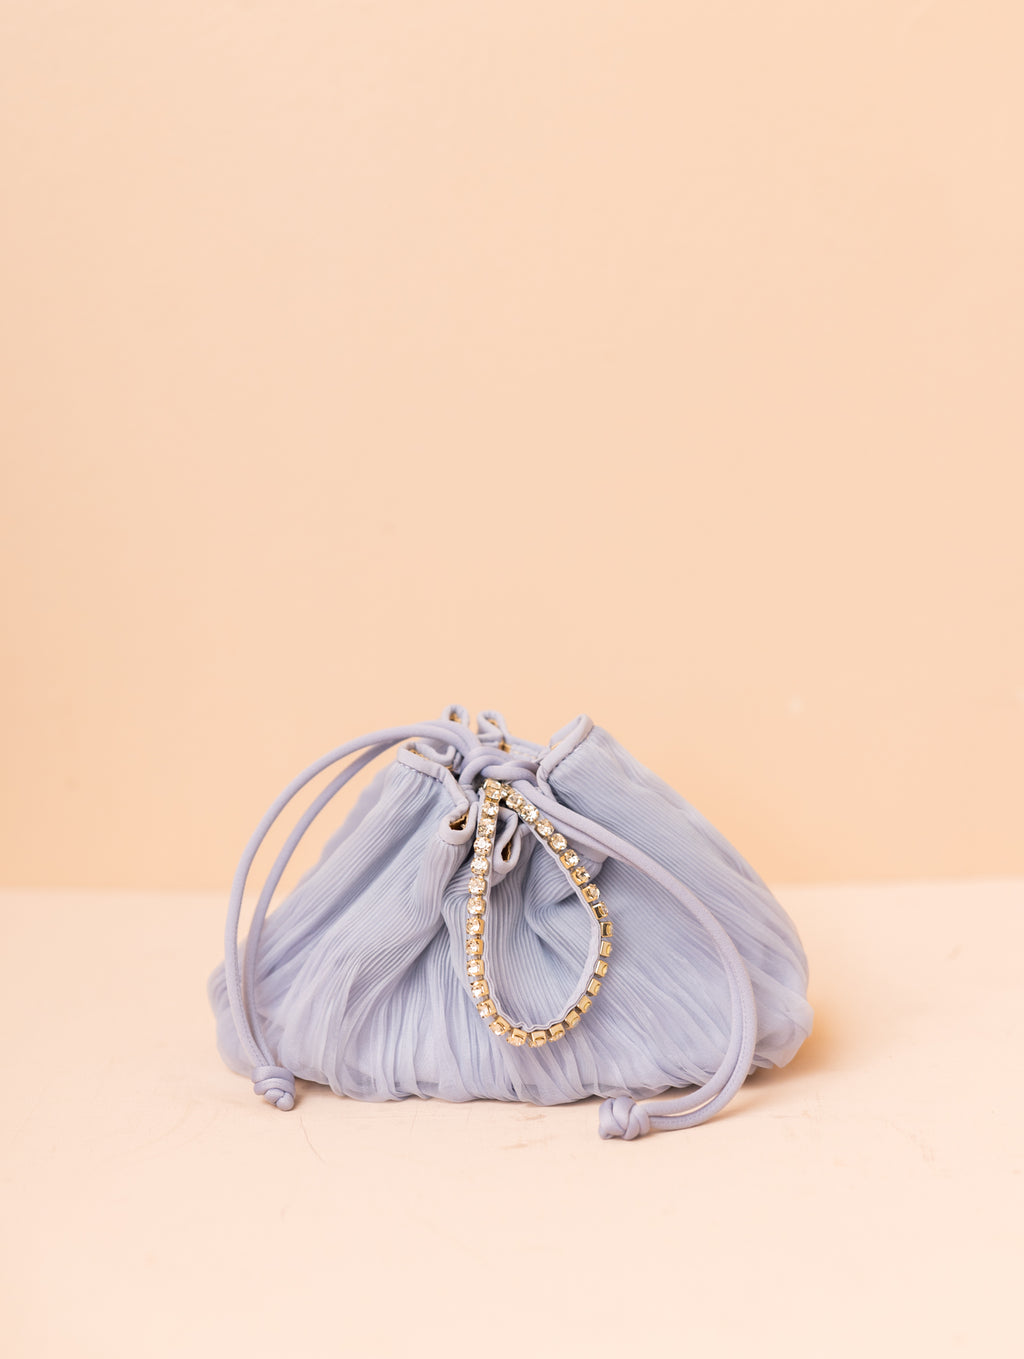 FATALE BLUE purse